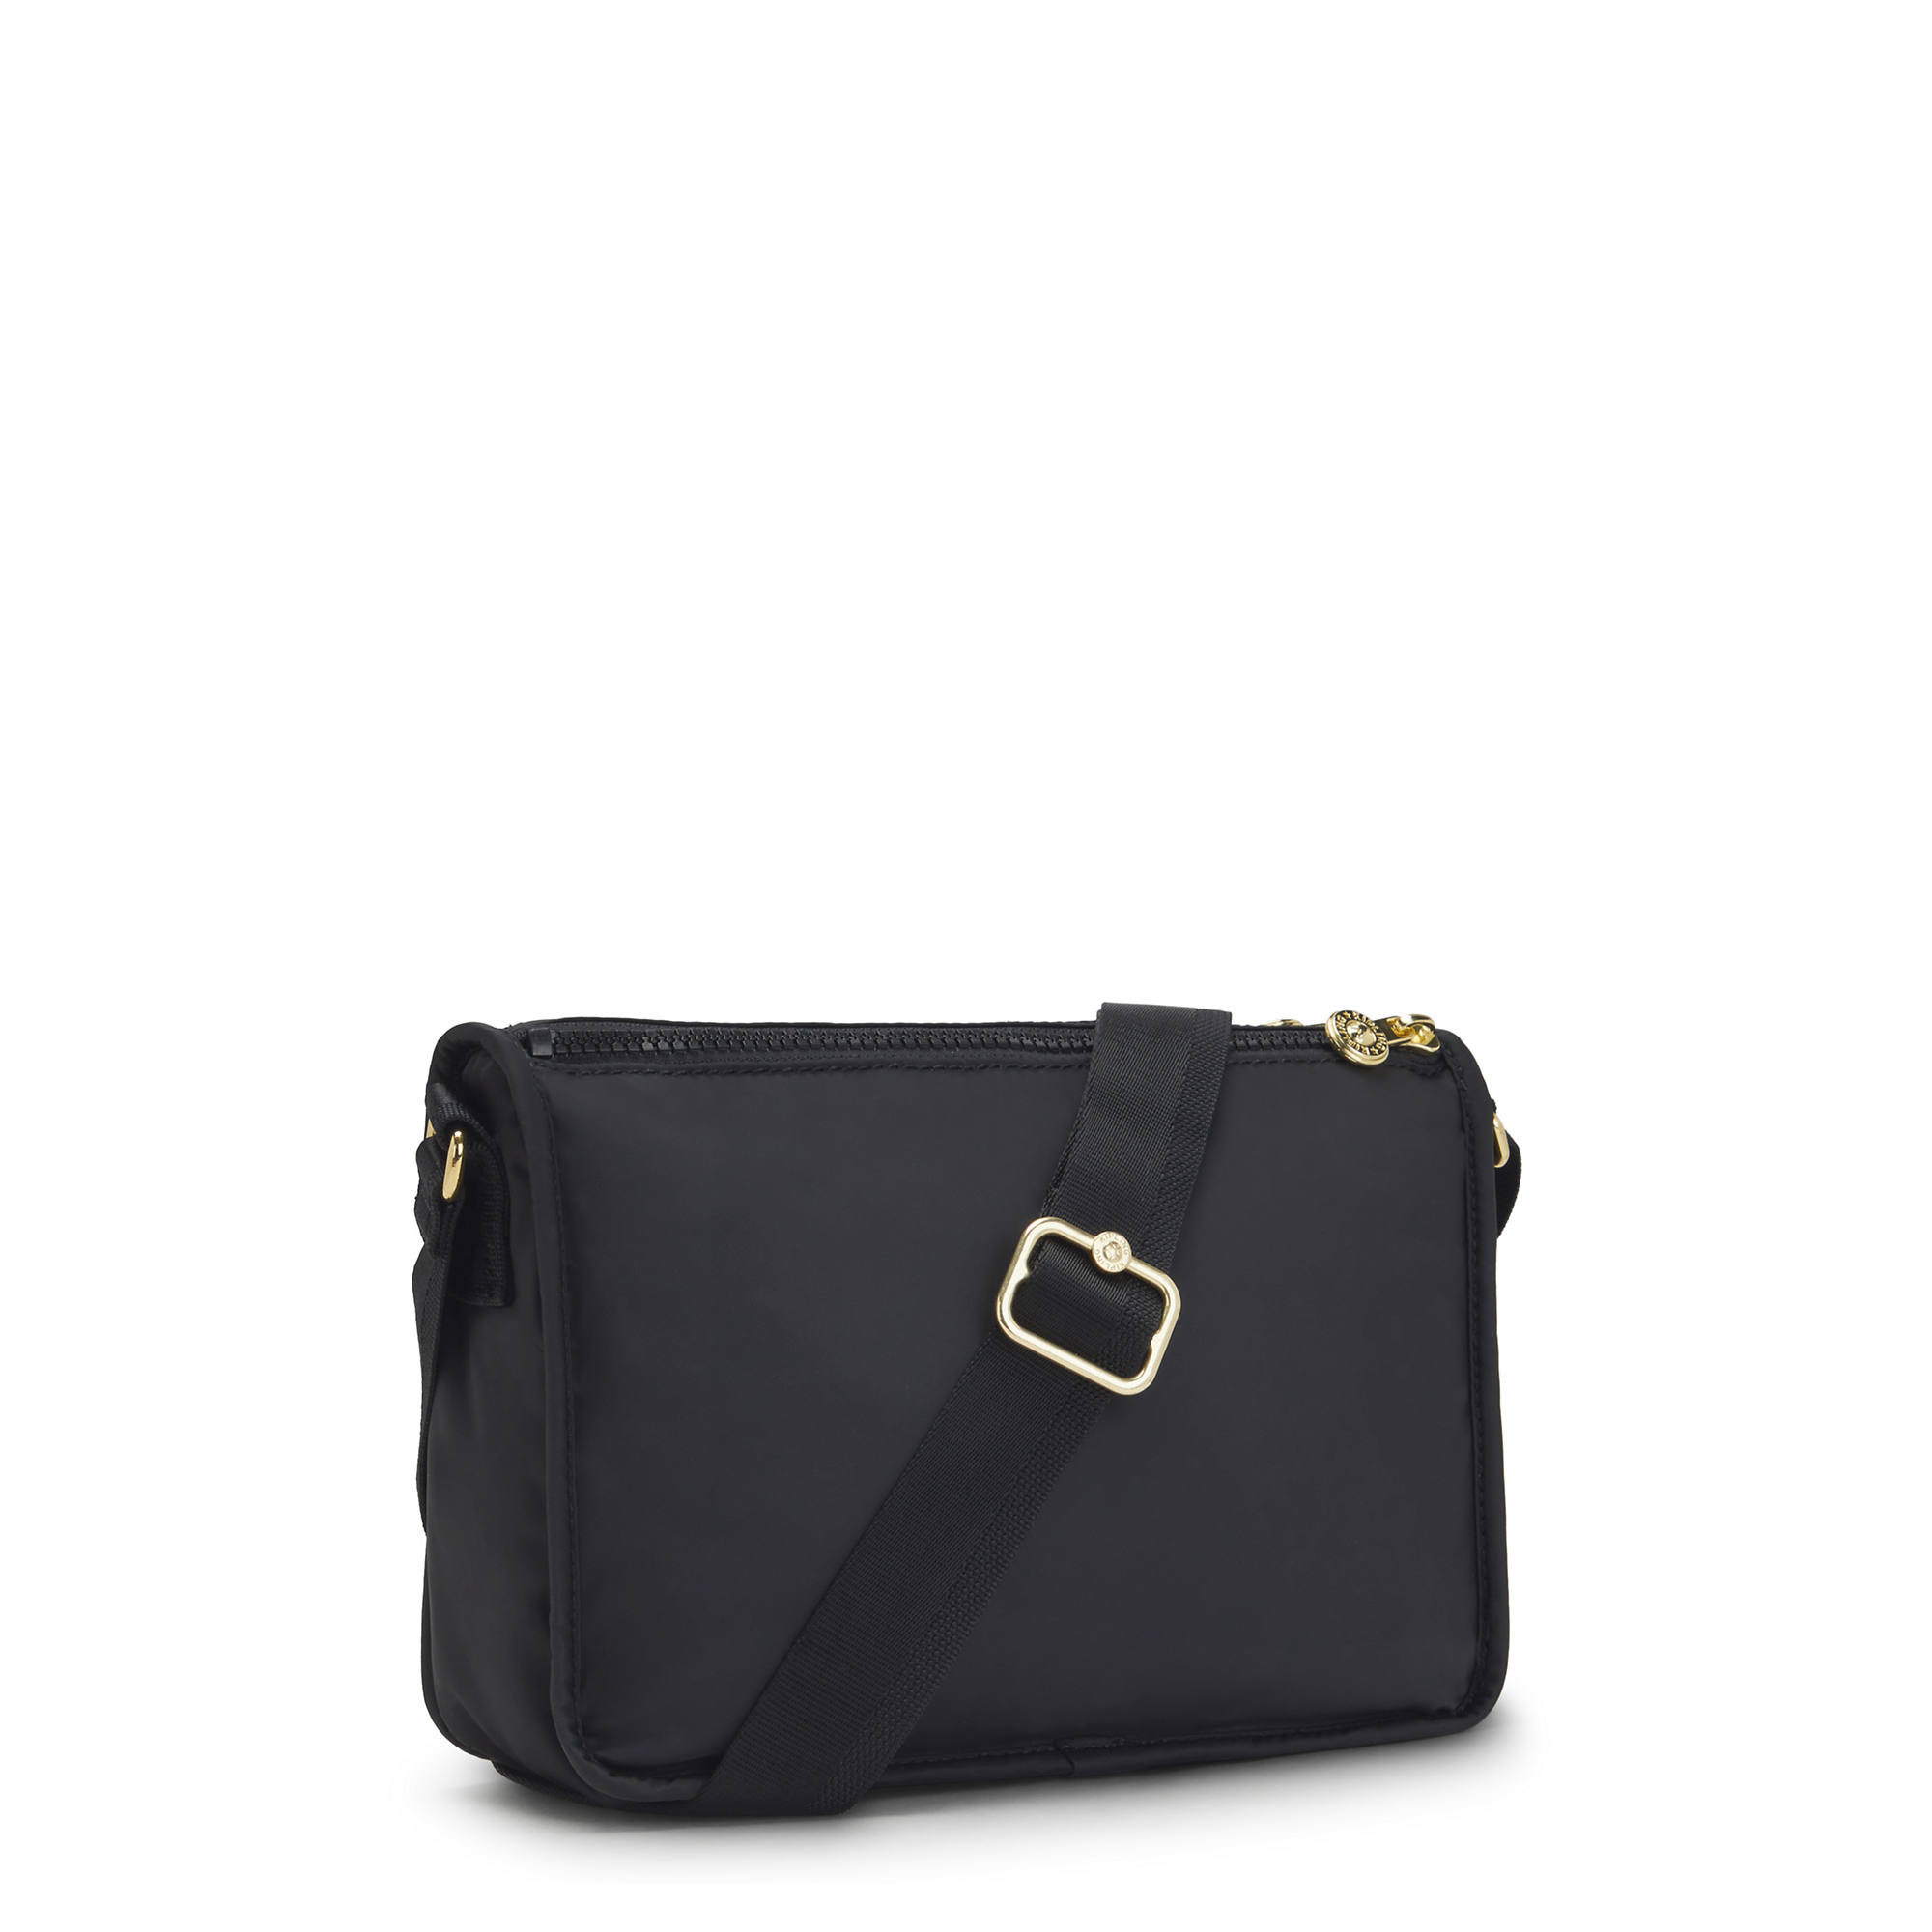 Kipling Hailey Crossbody Bag | eBay